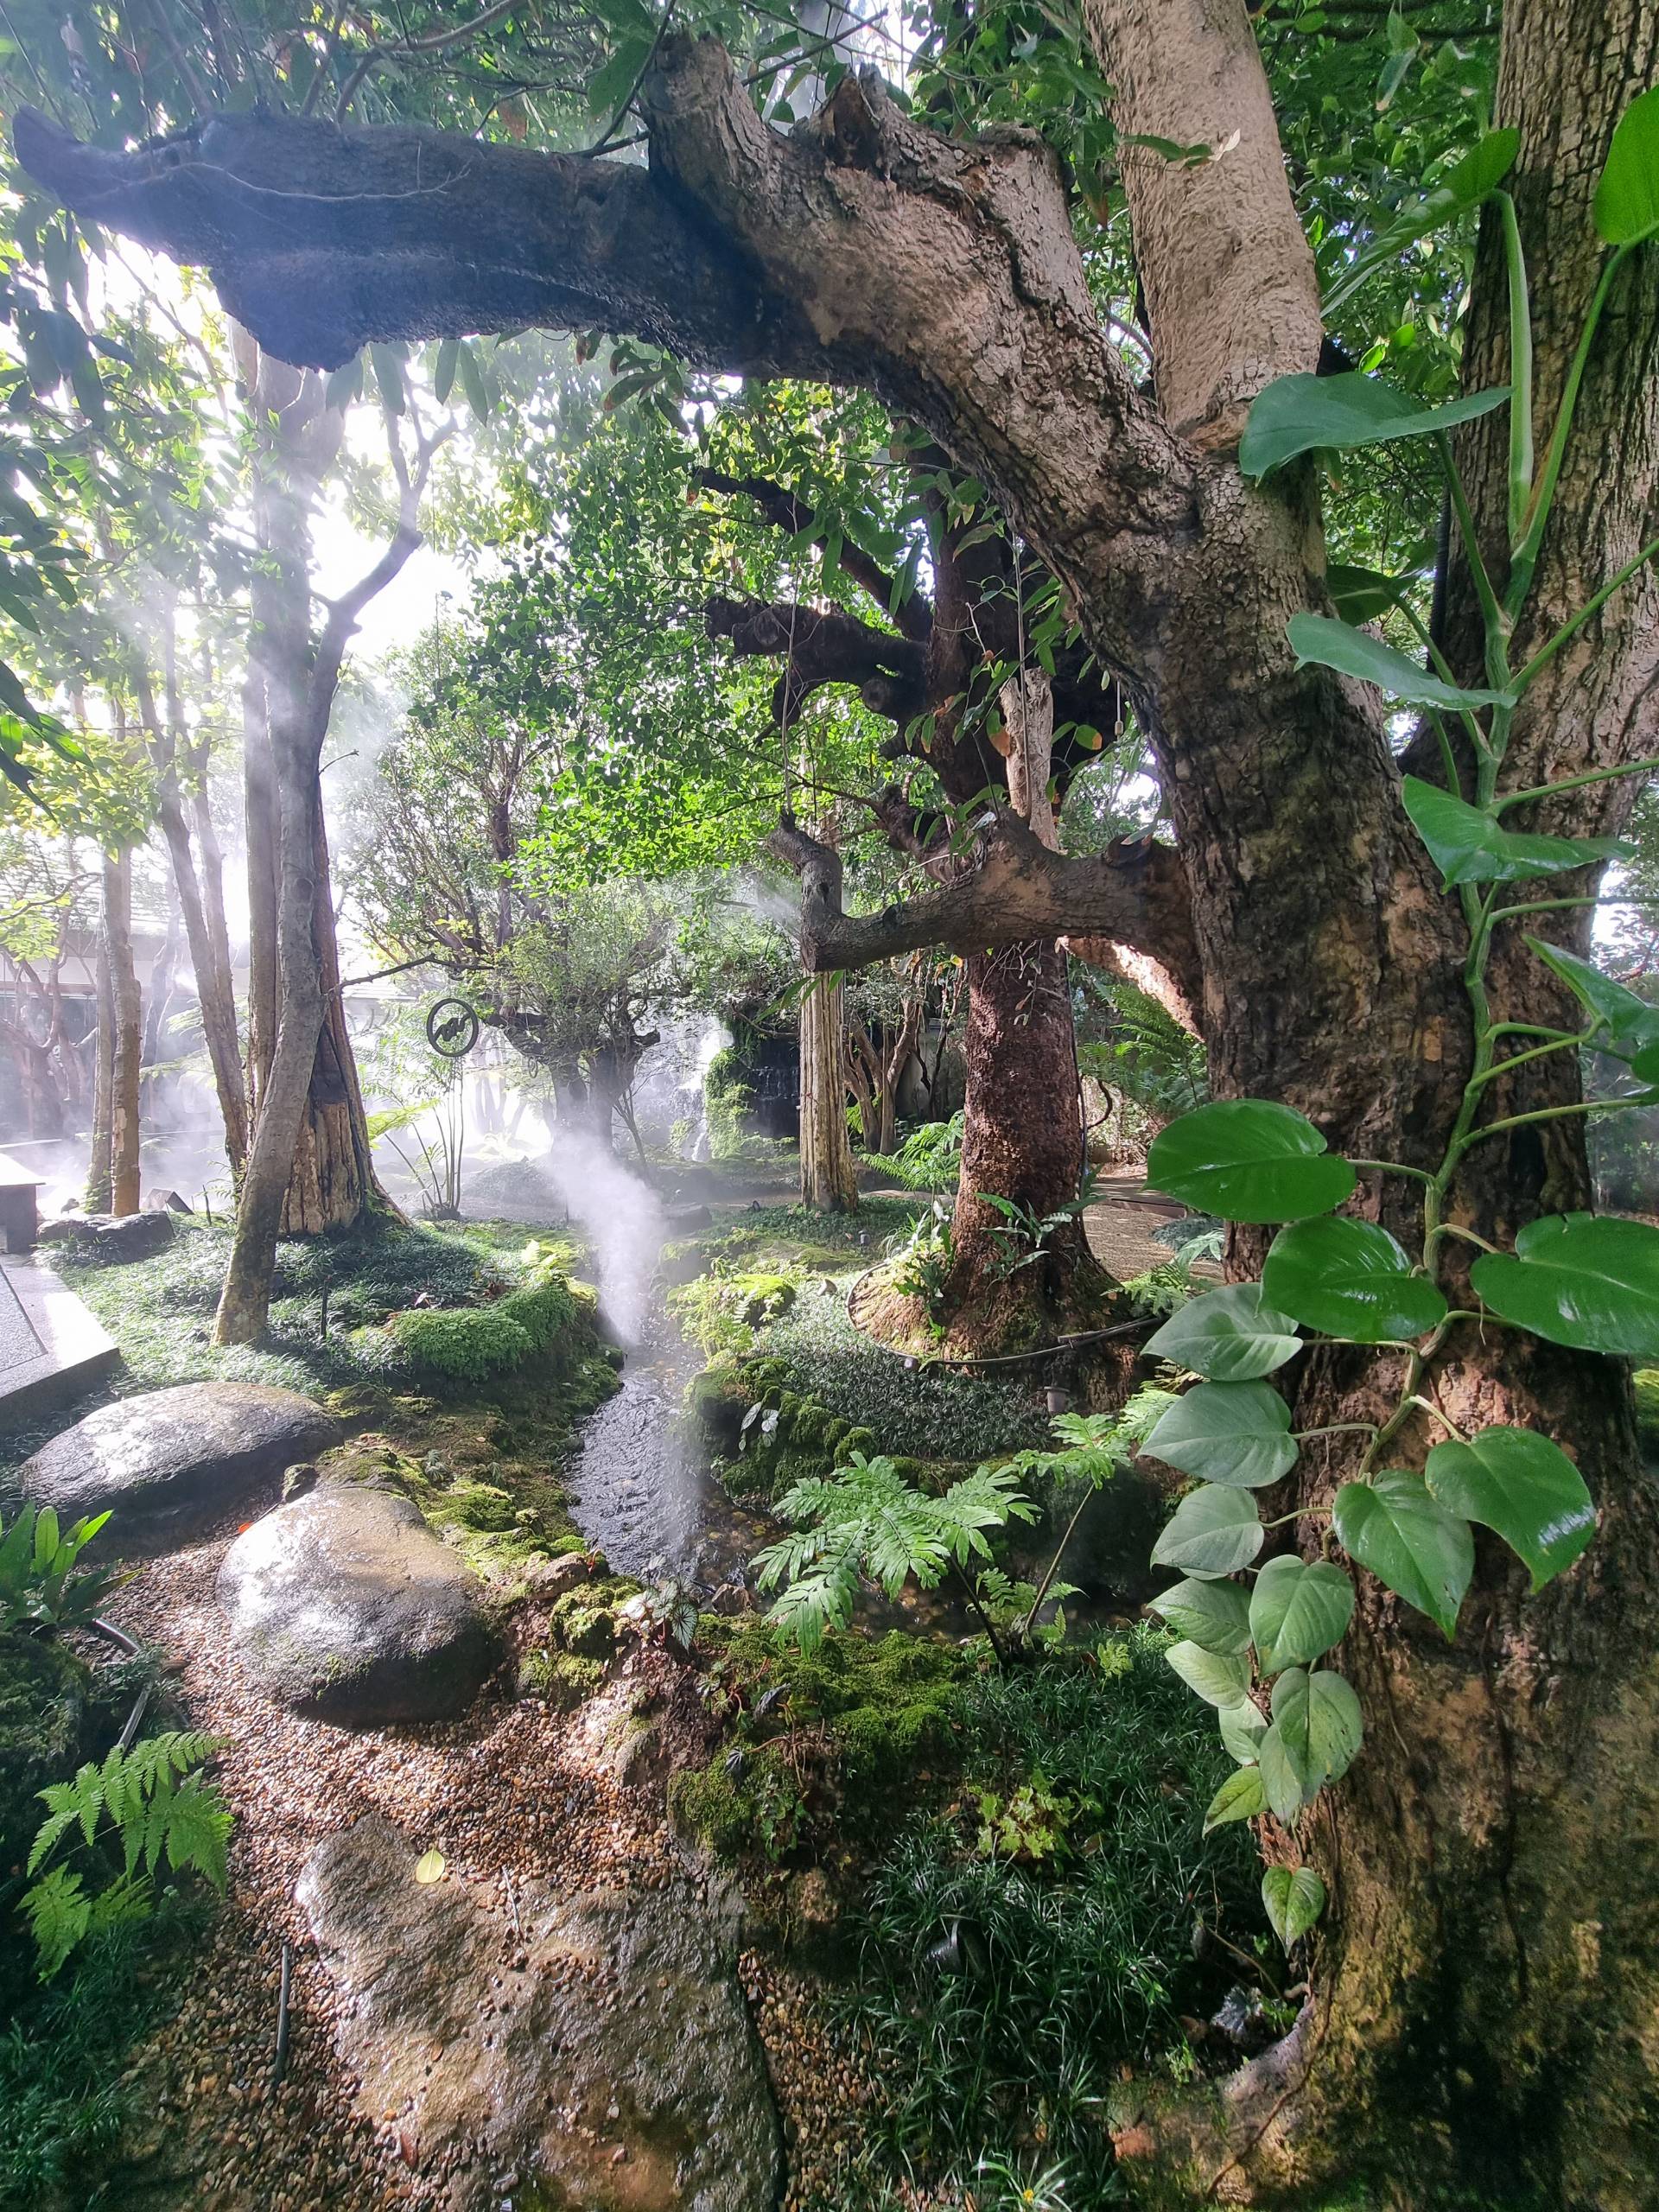 Chom magical garden with mist